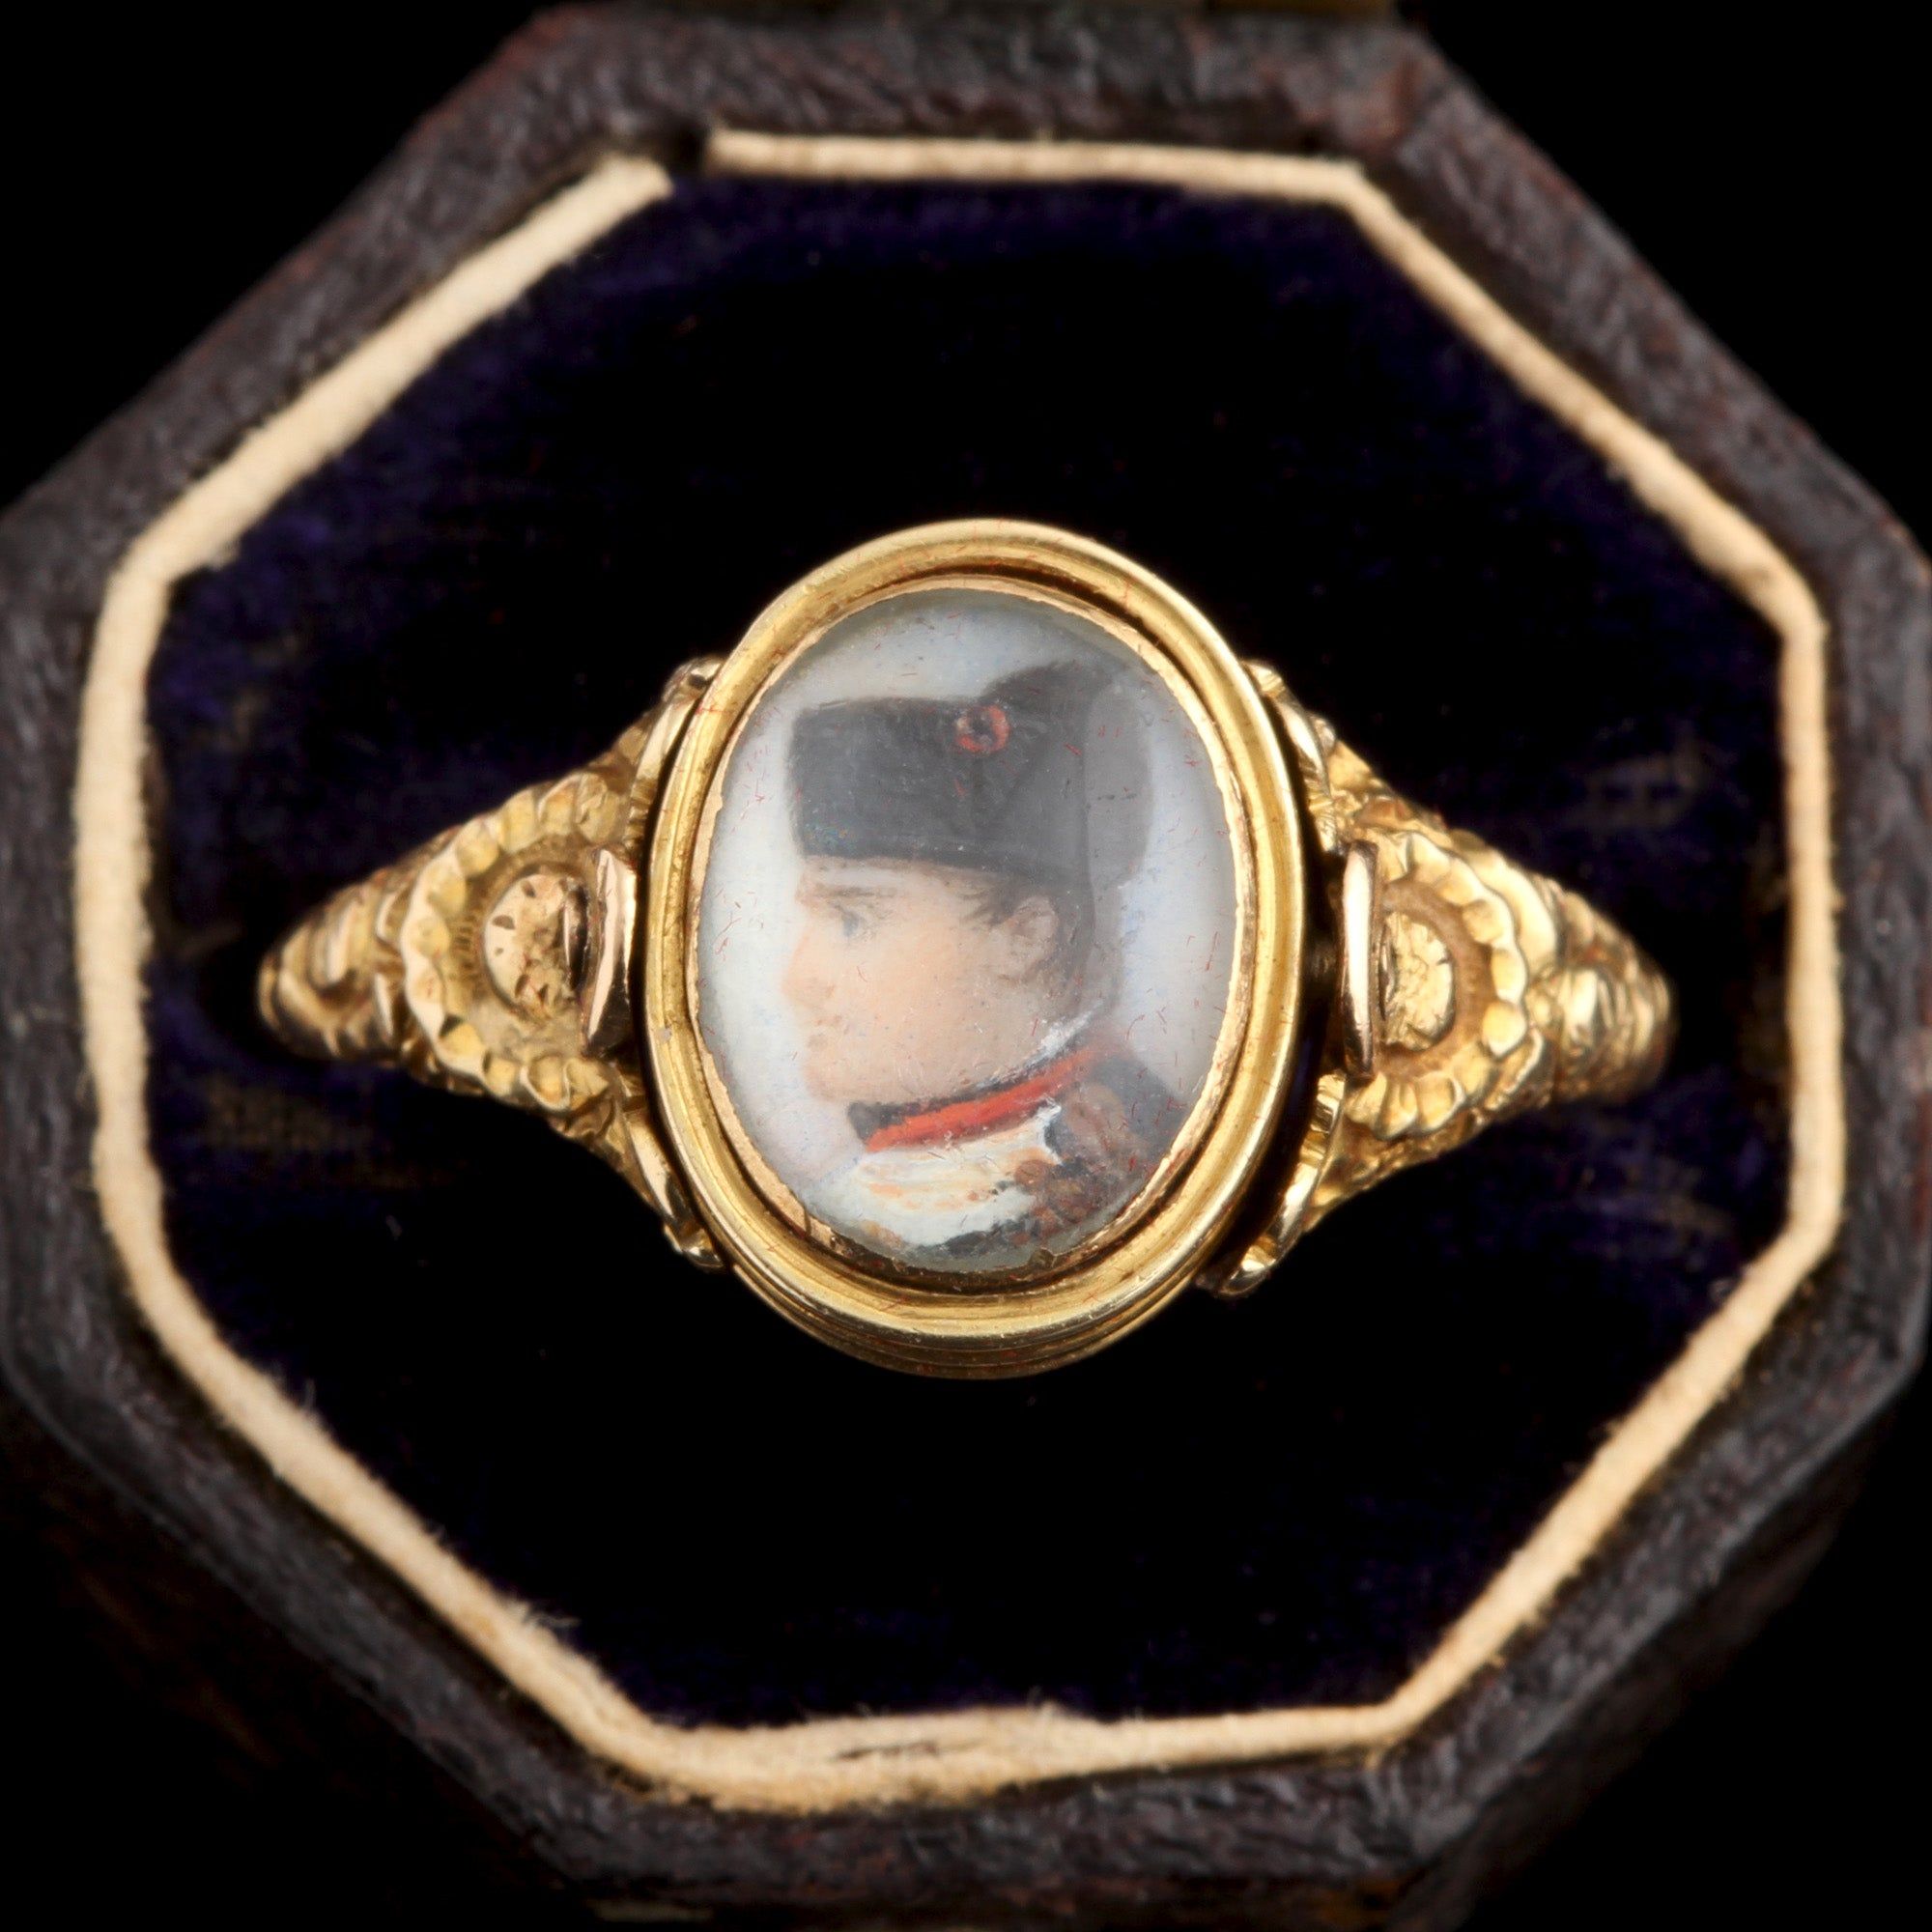 Detail of Napoleon Loyalist "Ne M'Oubliez Paz" Swivel Ring showing Napoleon's portrait